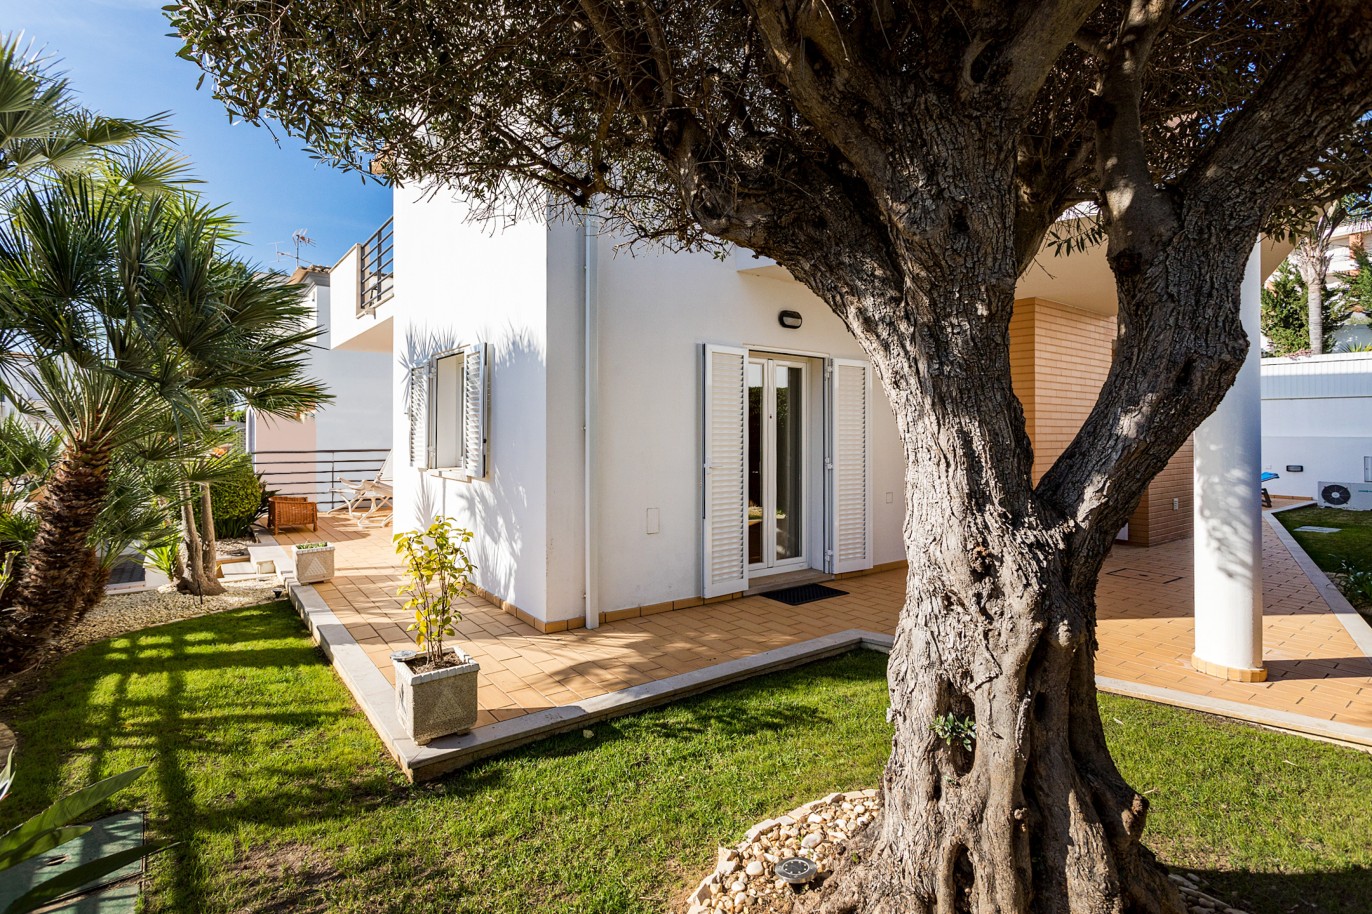 4 bedroom detached villa with pool for sale in Albufeira, Algarve_214368